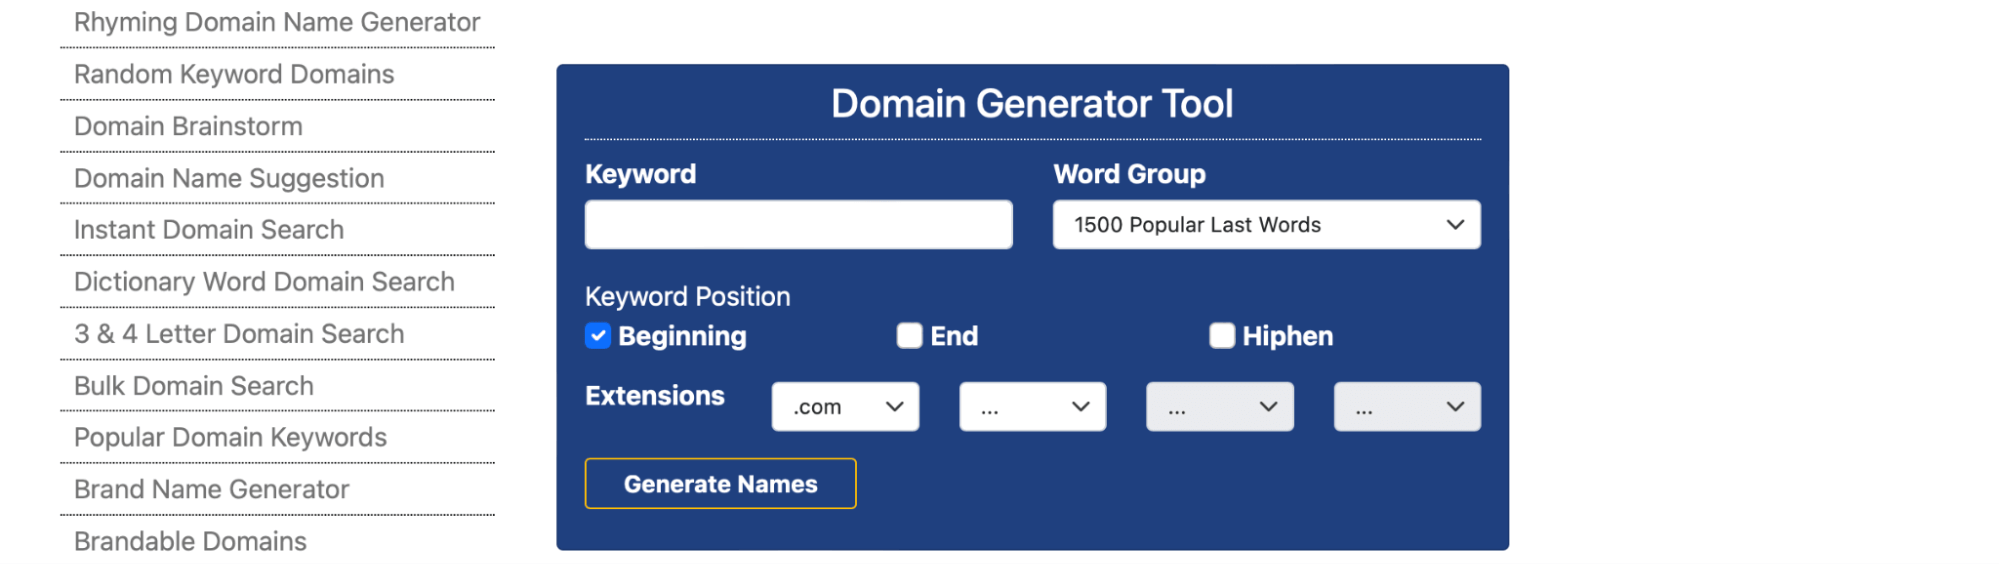 Namestall domain generator